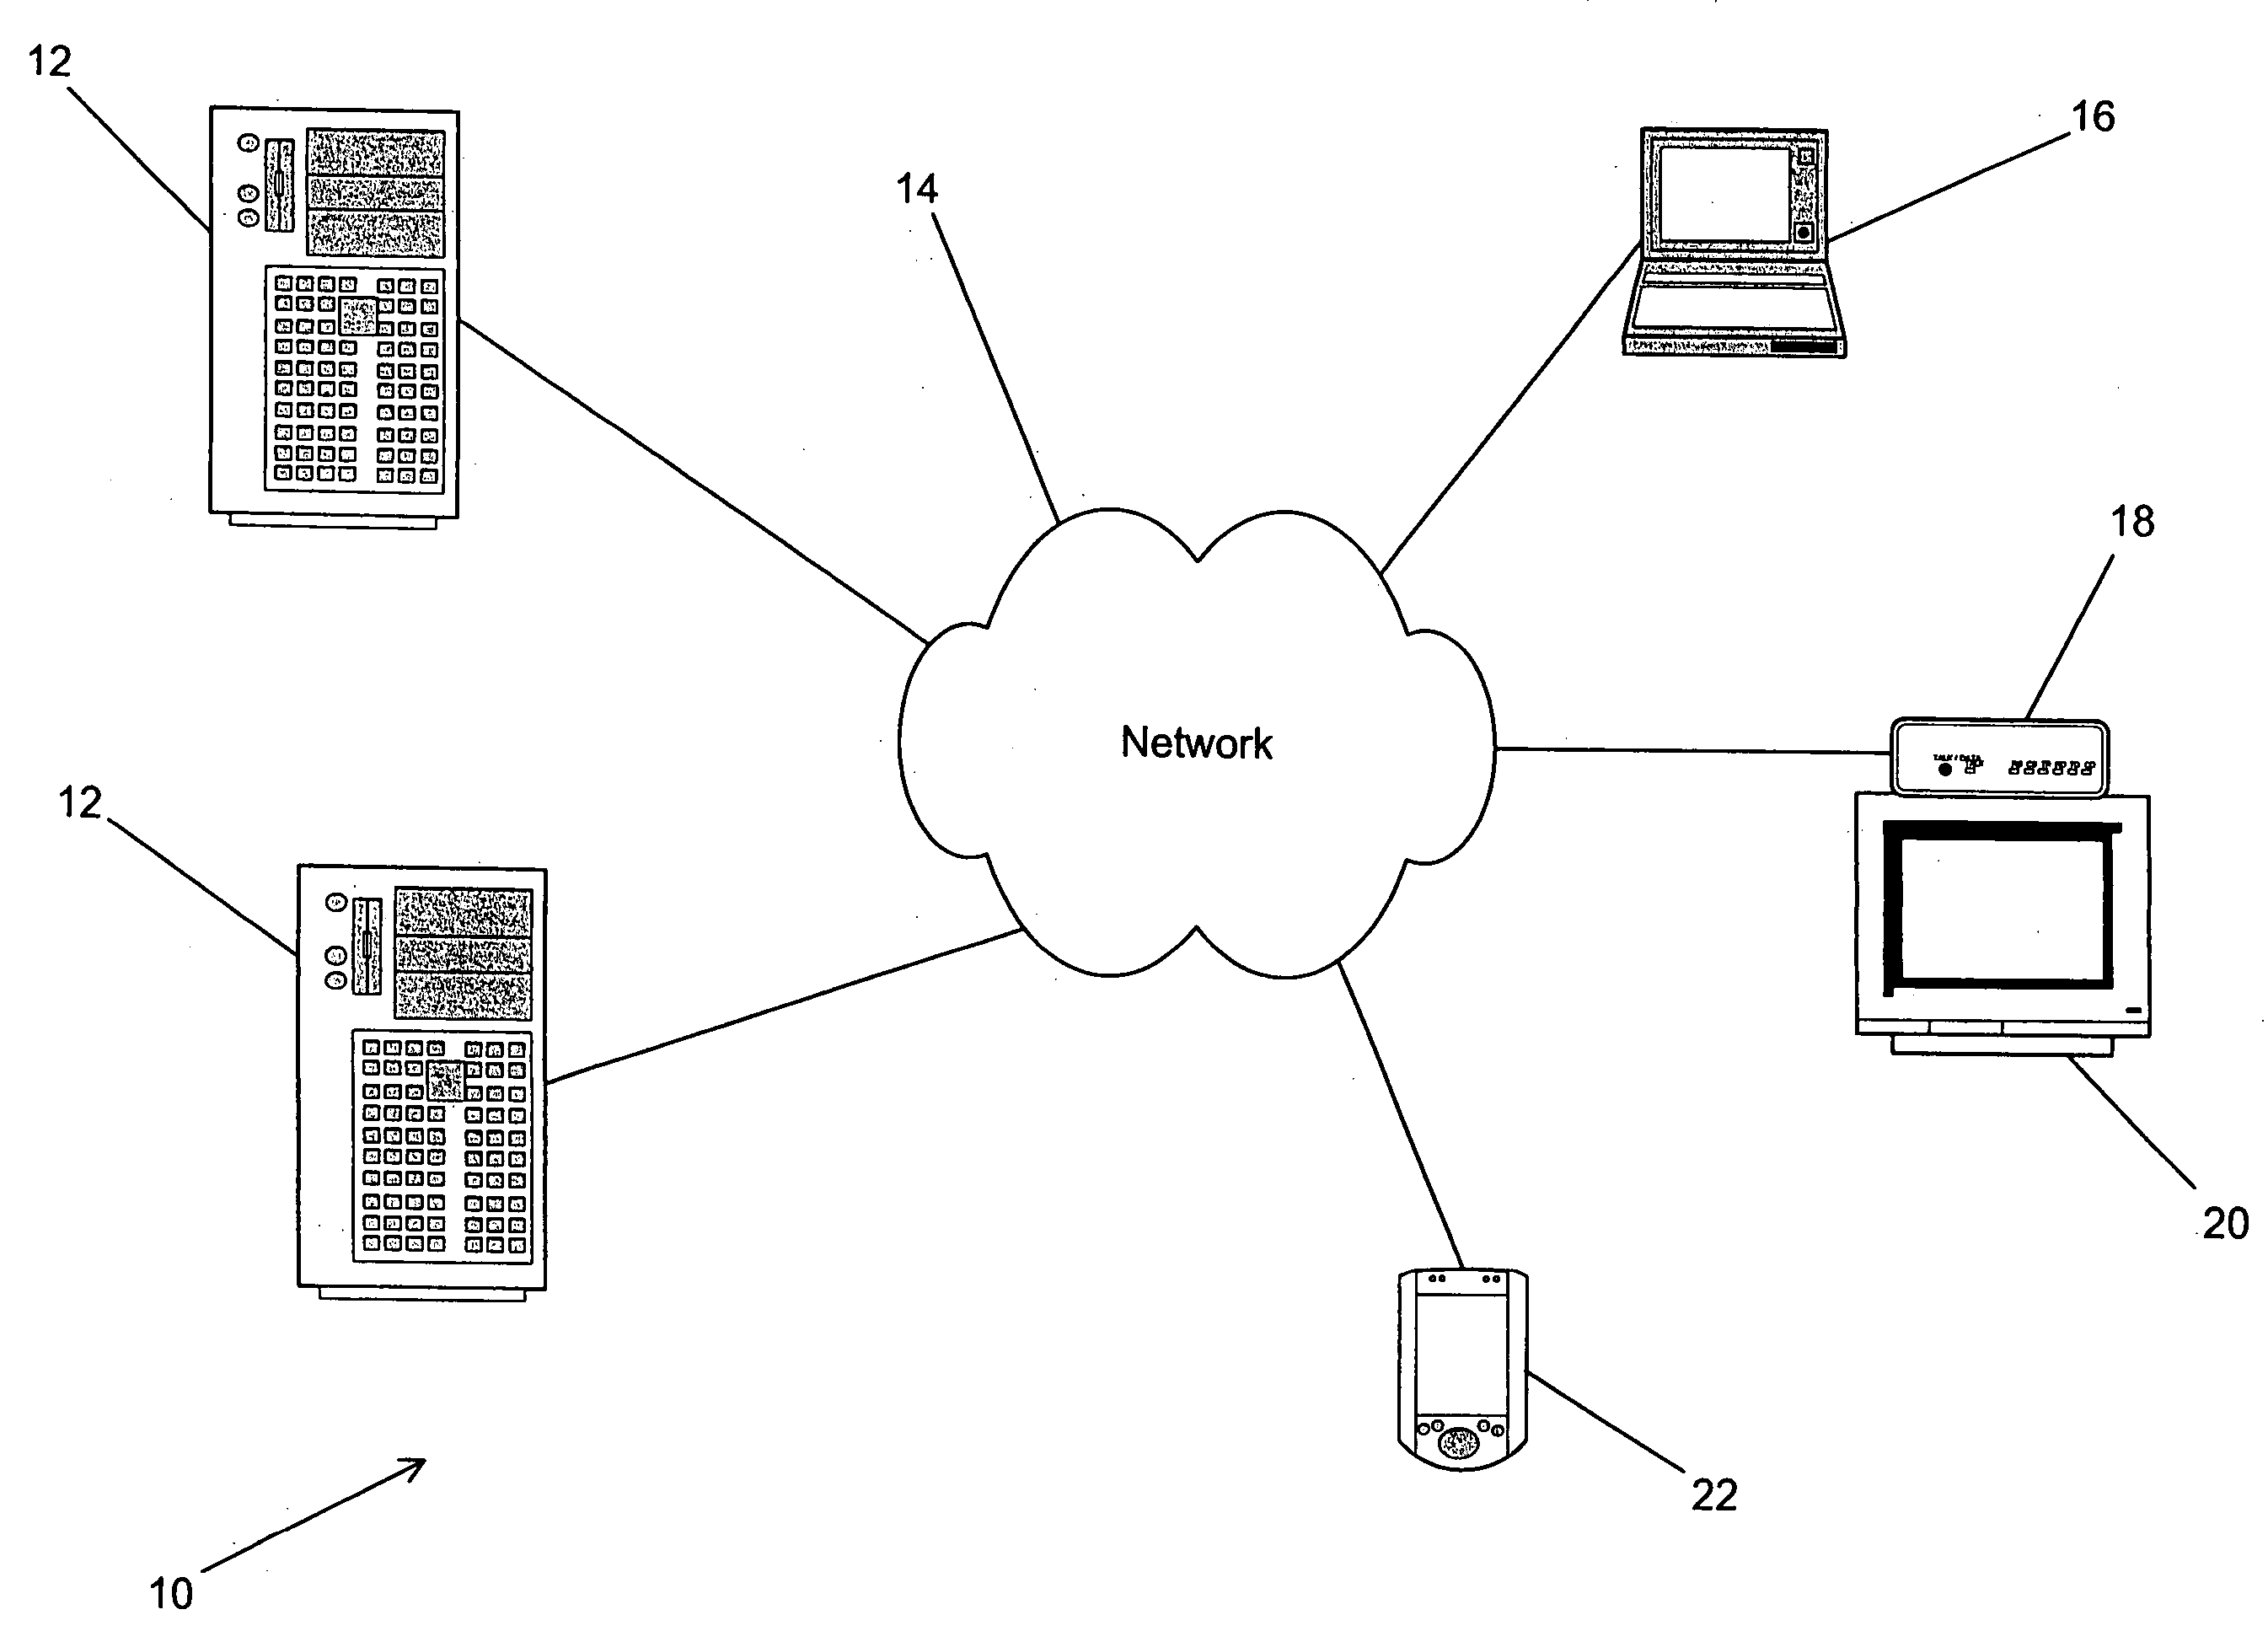 Interactive multichannel data distribution system